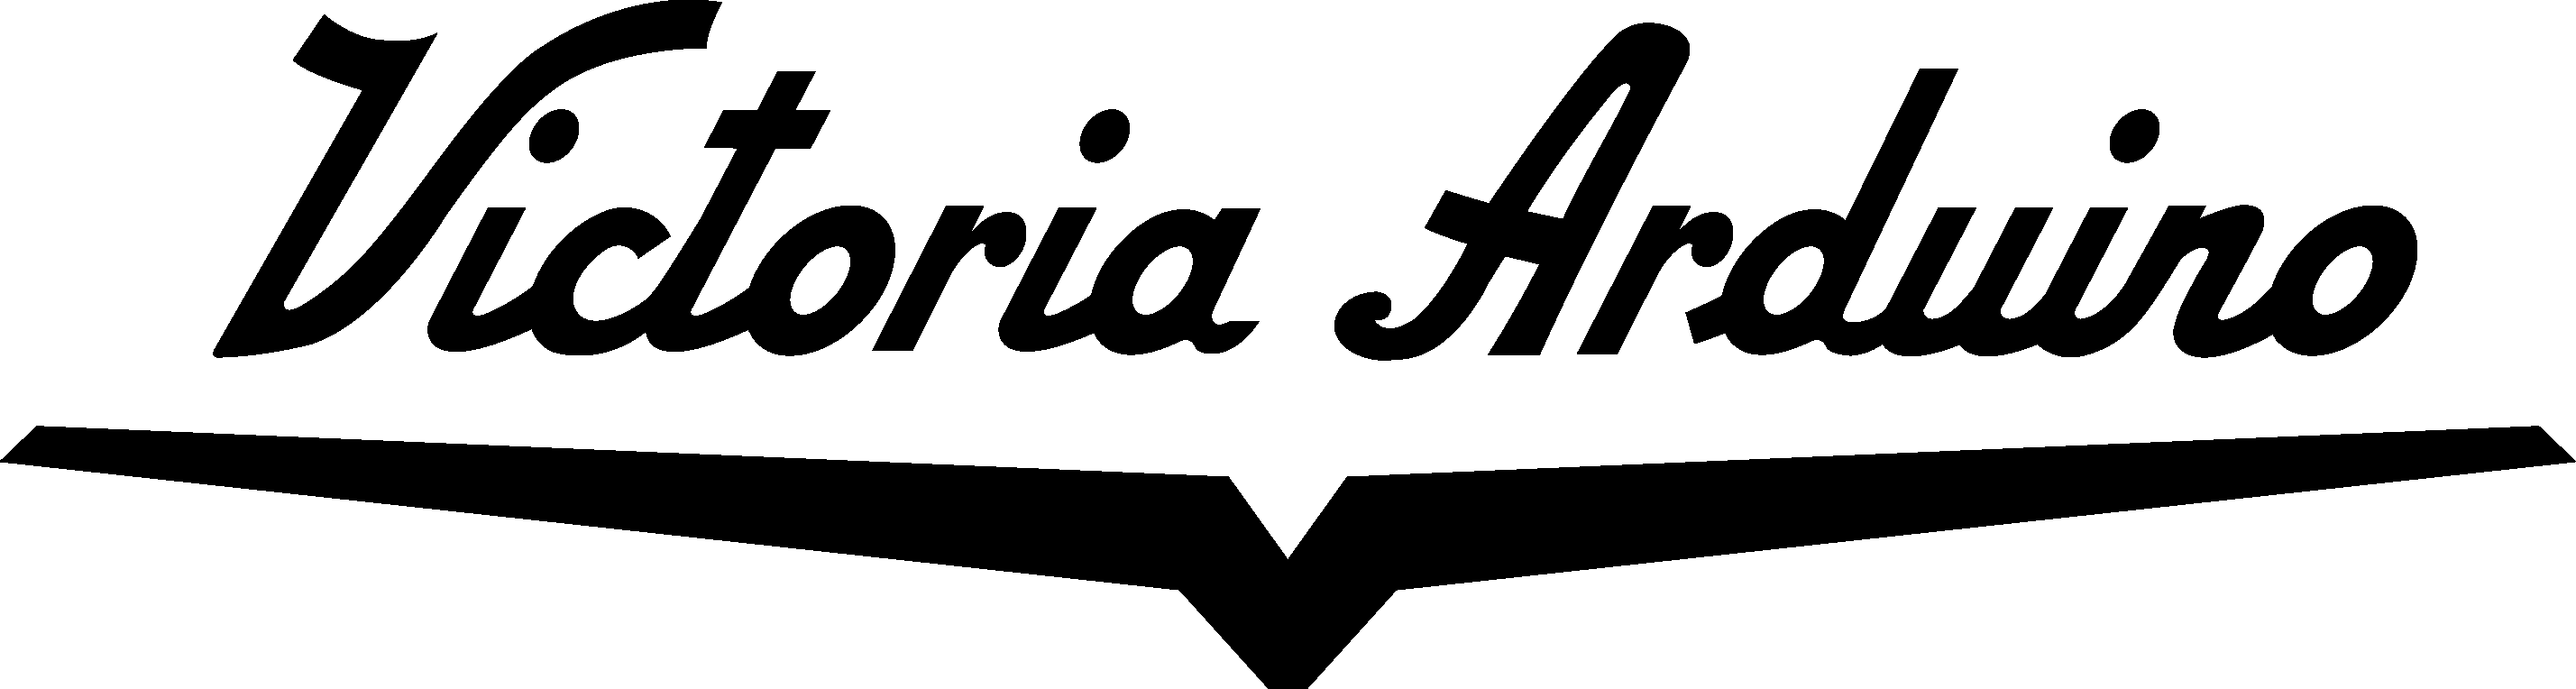 logo thương hiệu Máy pha cafe Victoria Arduino